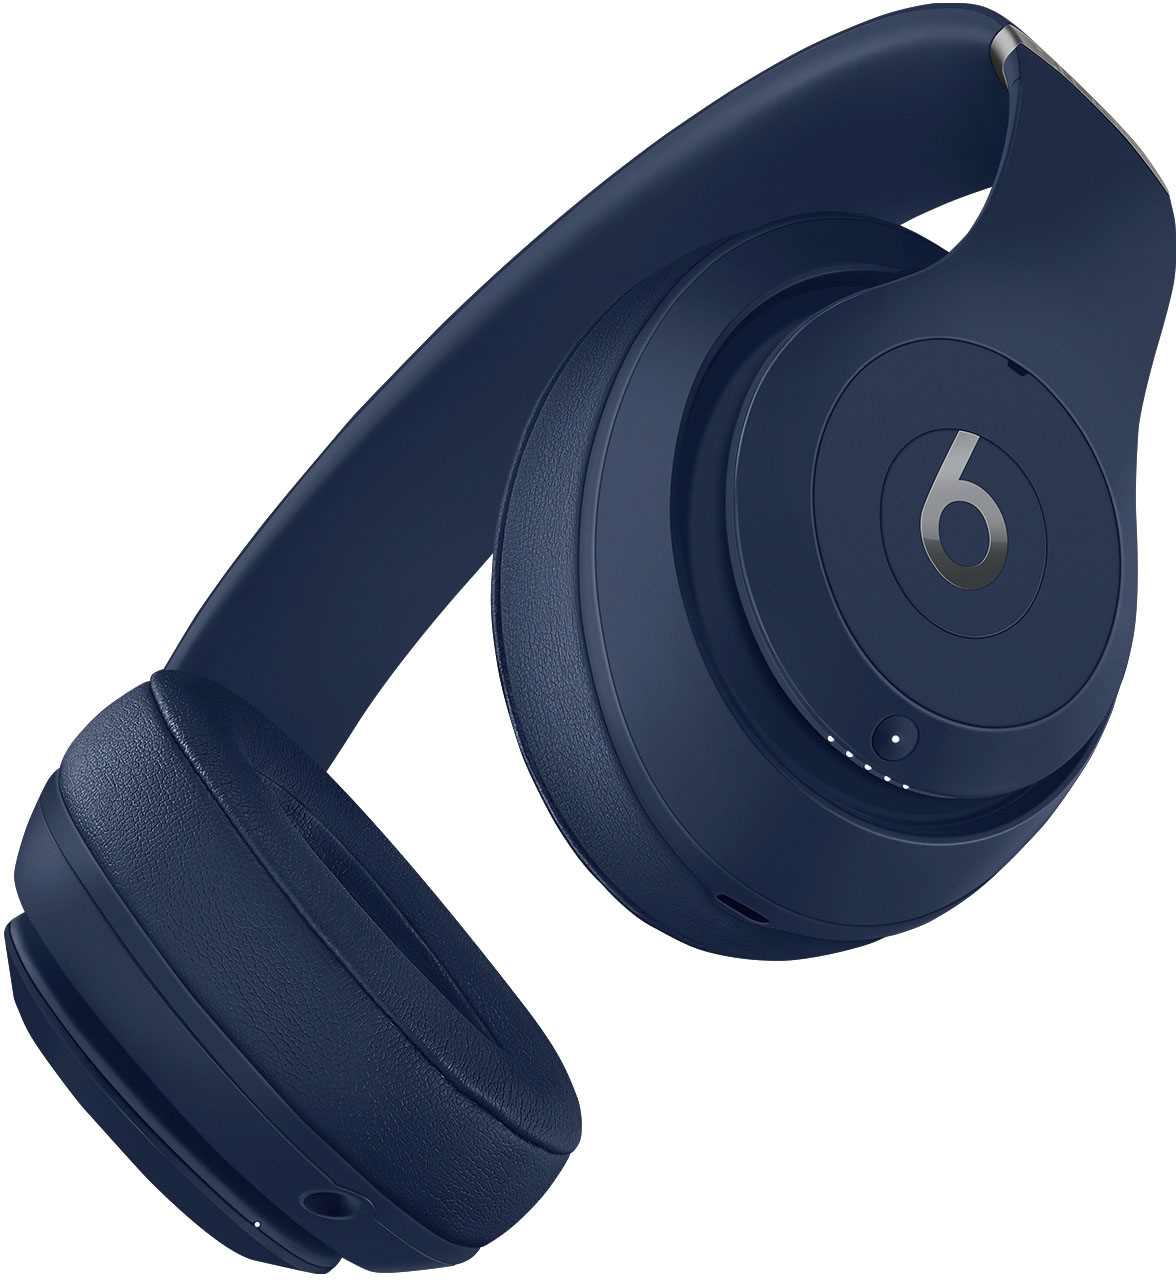 by Dr. Dre Beats Studio³ Wireless Noise Cancelling Headphones Blue MX402LL/A - Best Buy